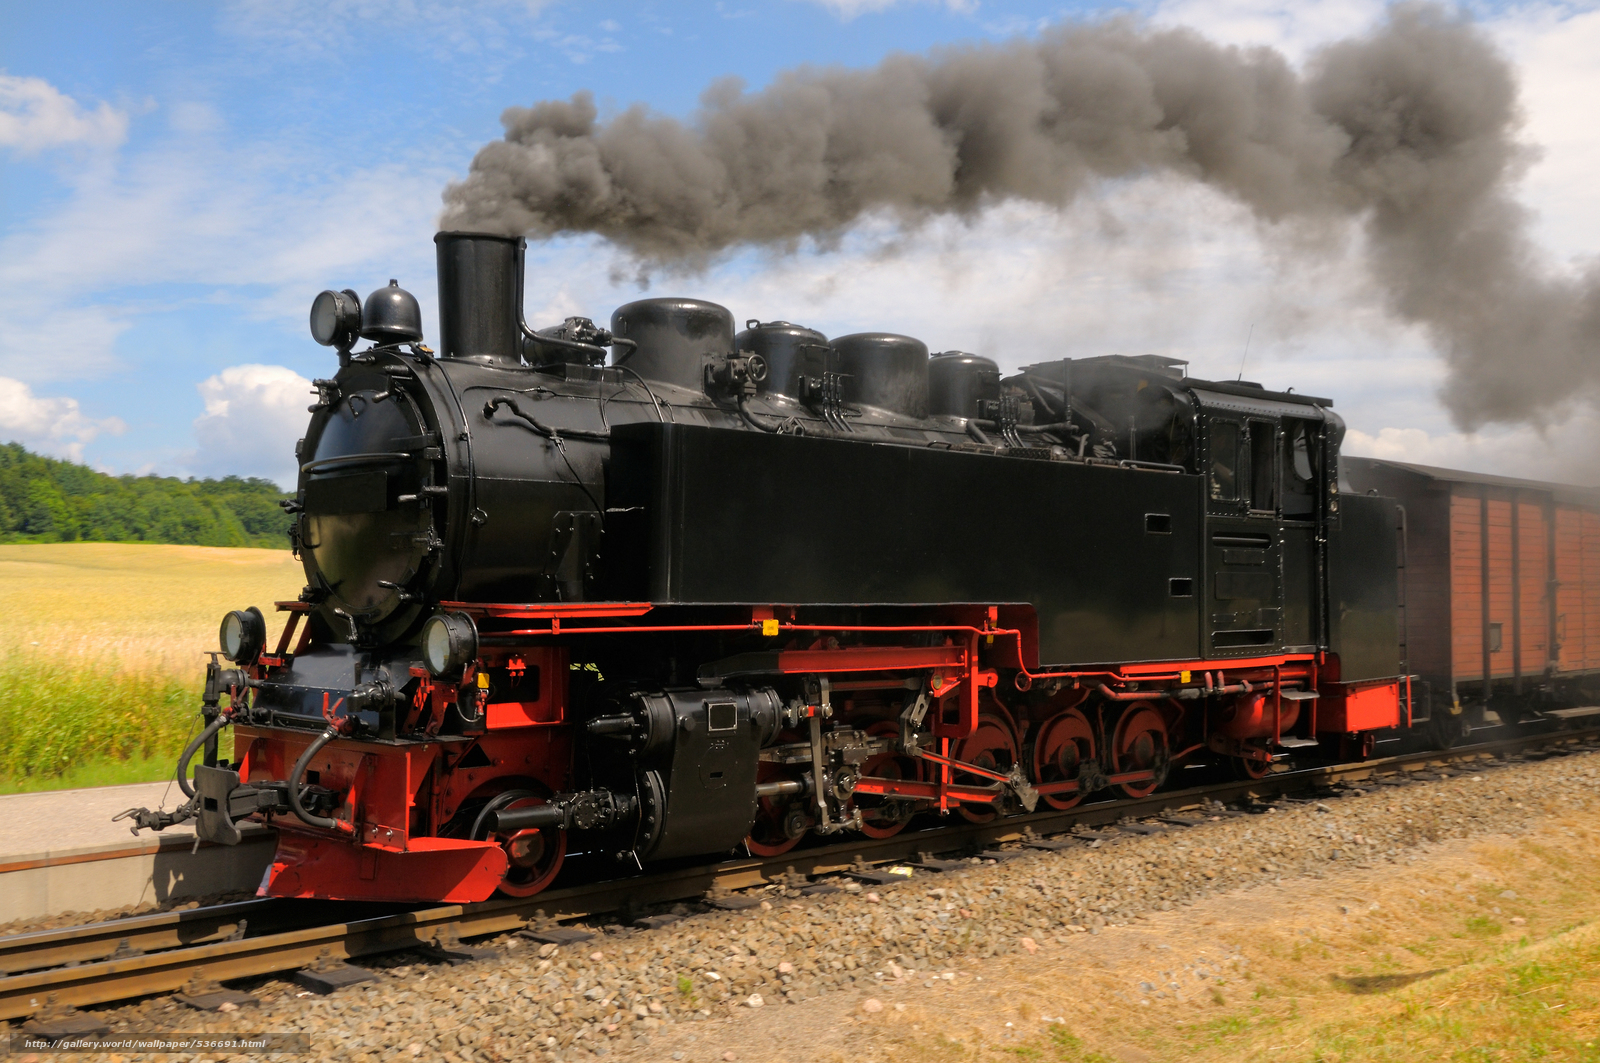 Download wallpaper Steam train locomotive free desktop wallpaper in